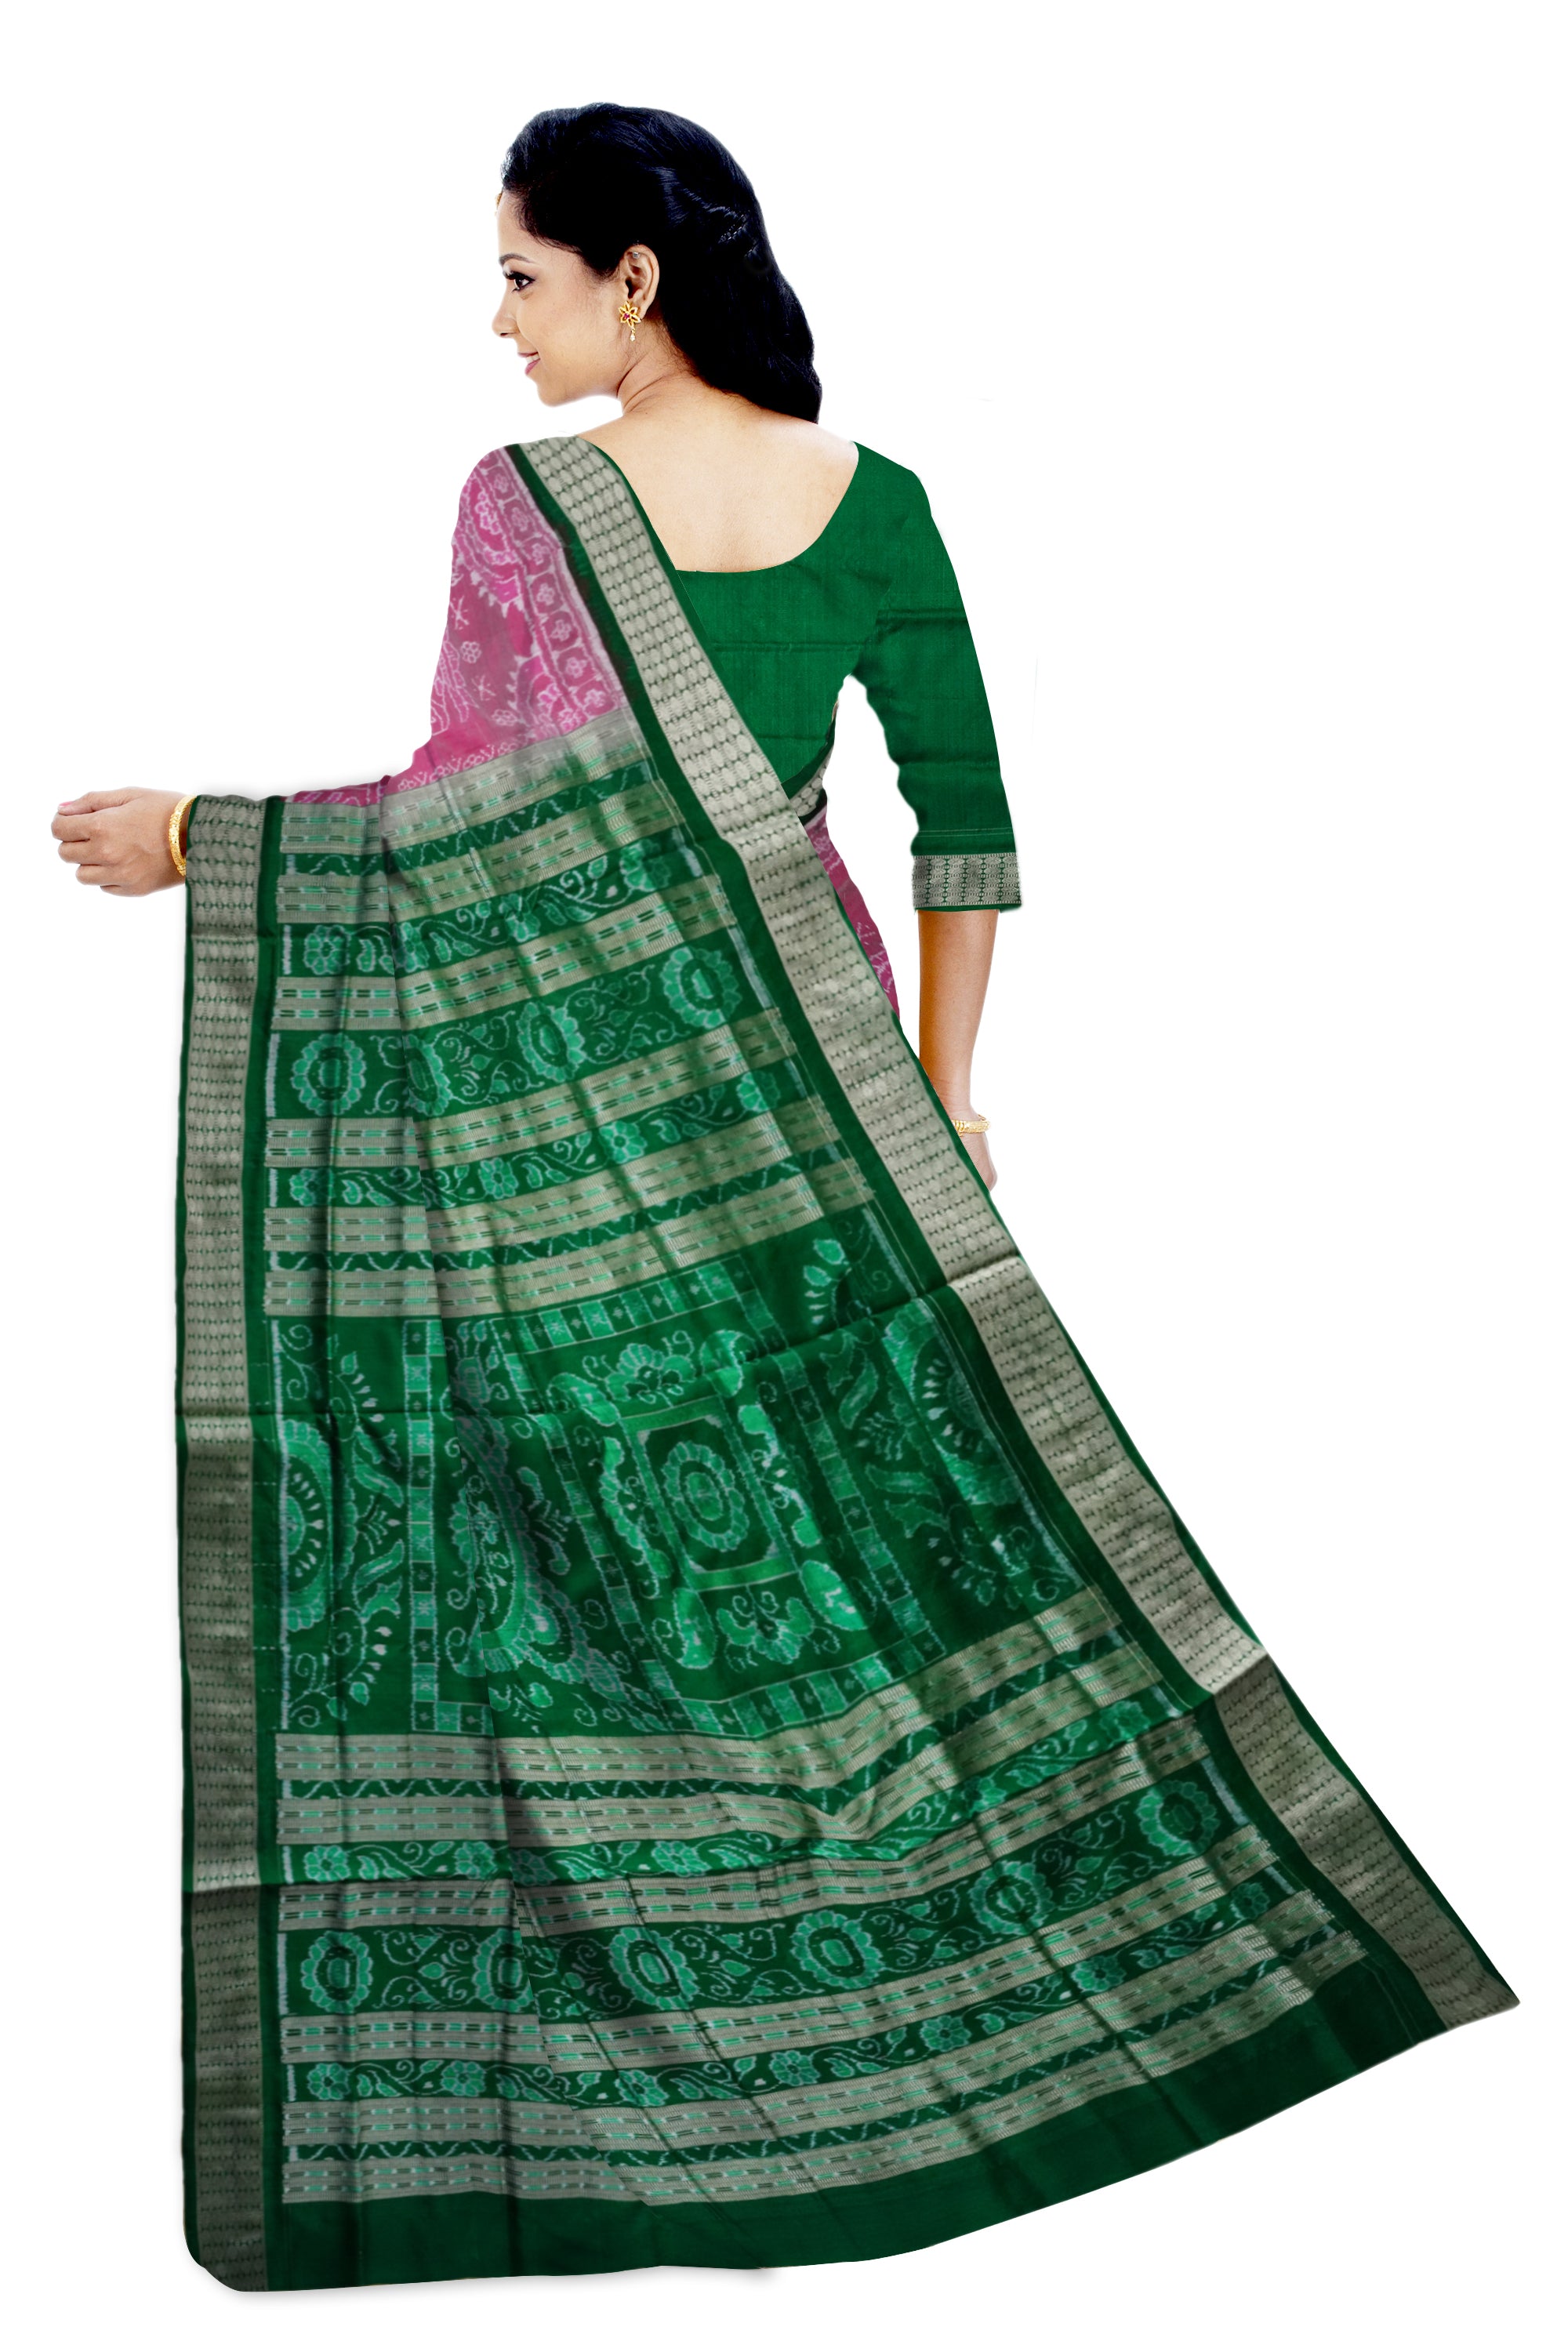 Latest Tajmahal pattern pure silk saree in Light pink and Green color. - Koshali Arts & Crafts Enterprise